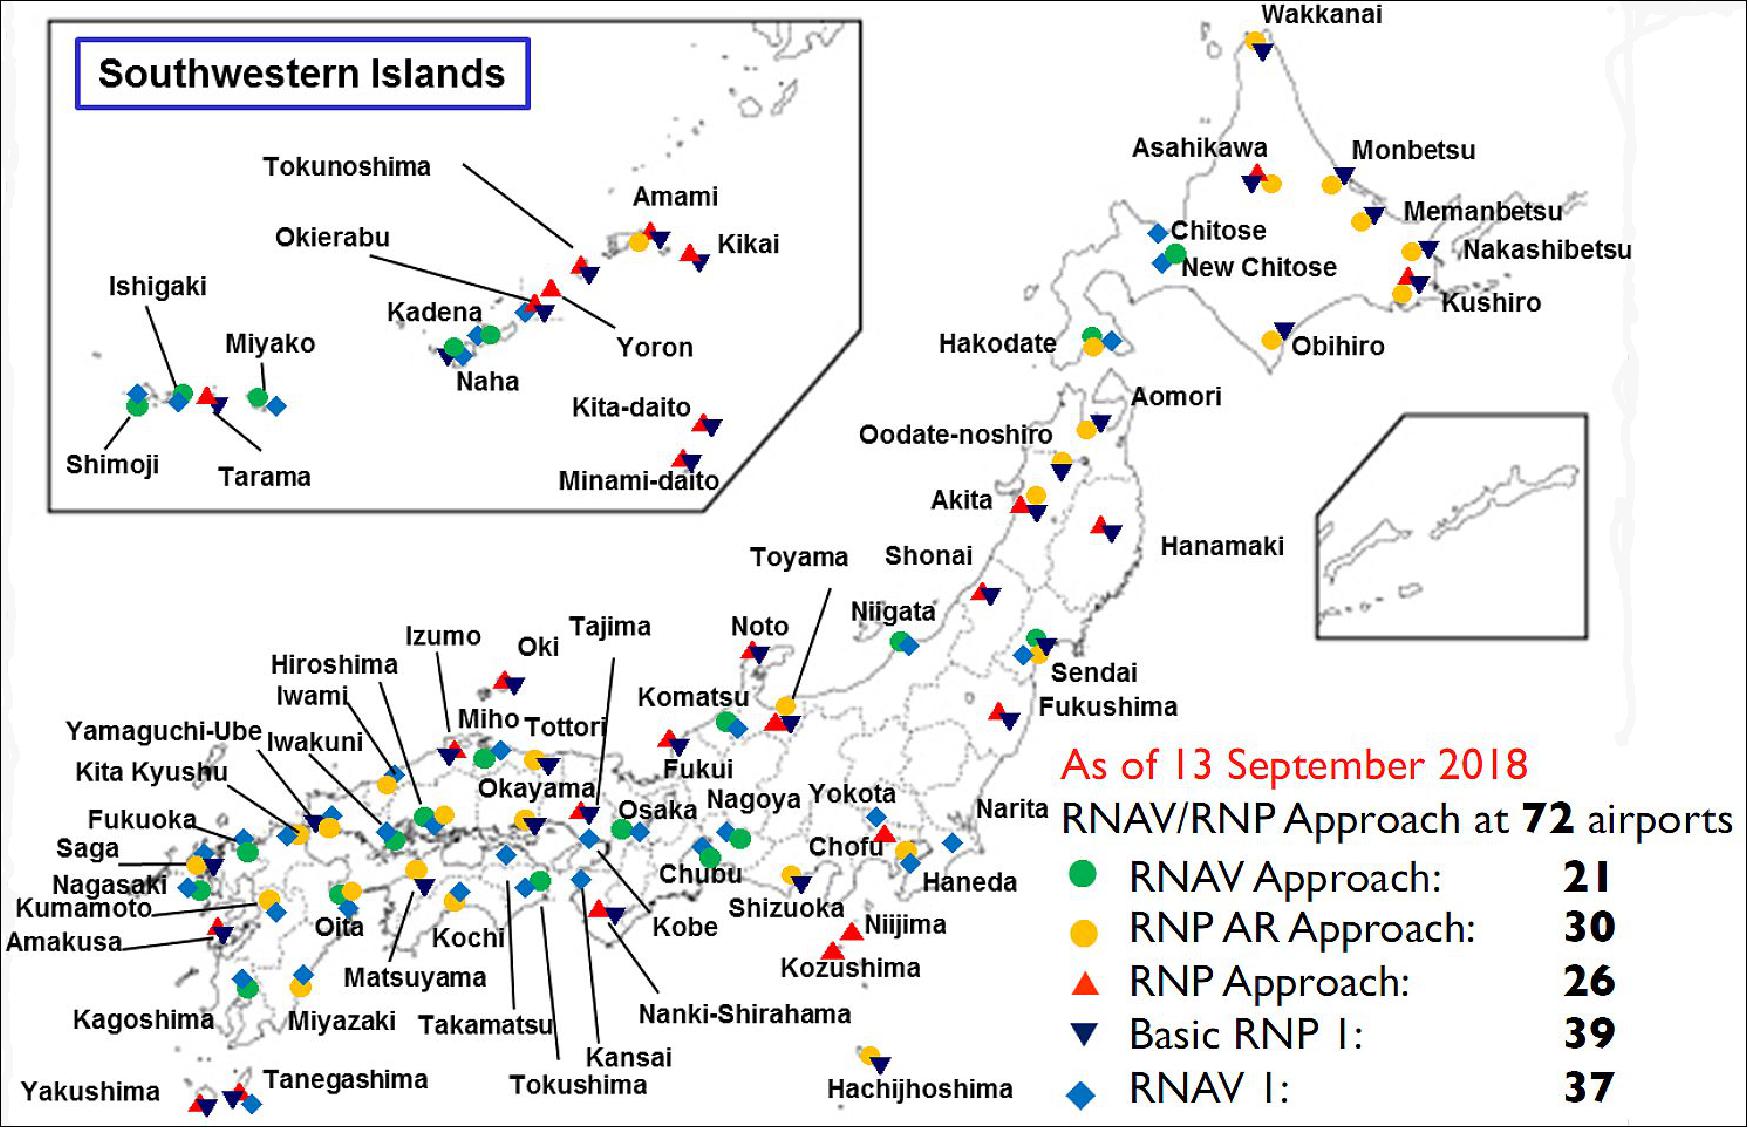 Figure 31: RNAV / RNP implementation [image credit: ENRI (Electronic Navigation Research Institute)]